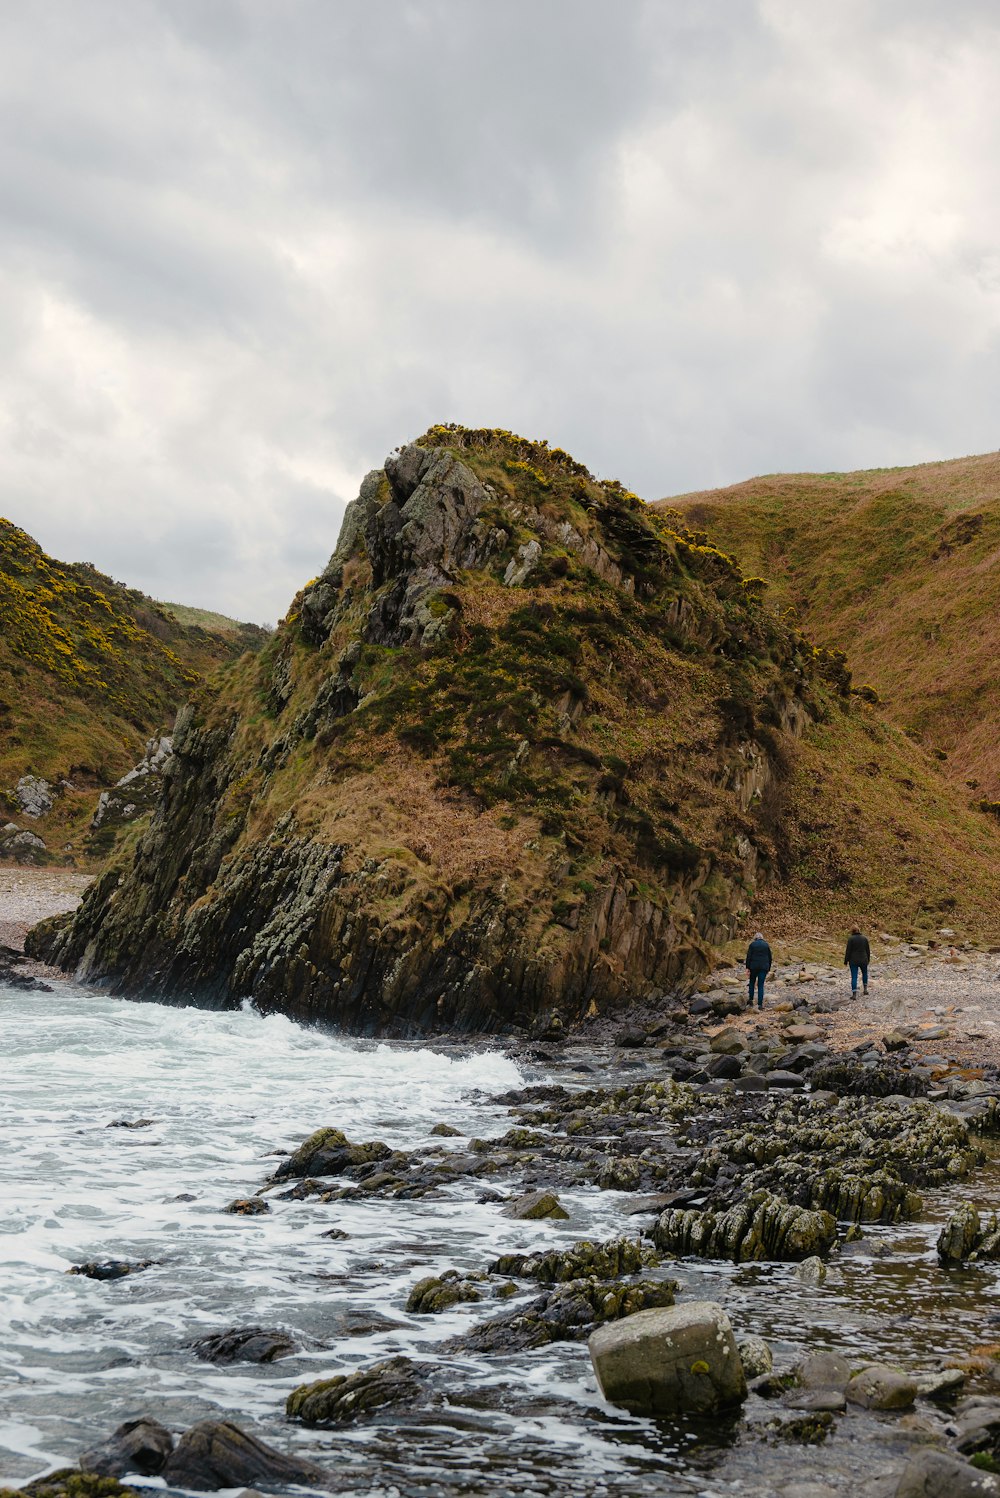 a couple of people walking along a rocky beach